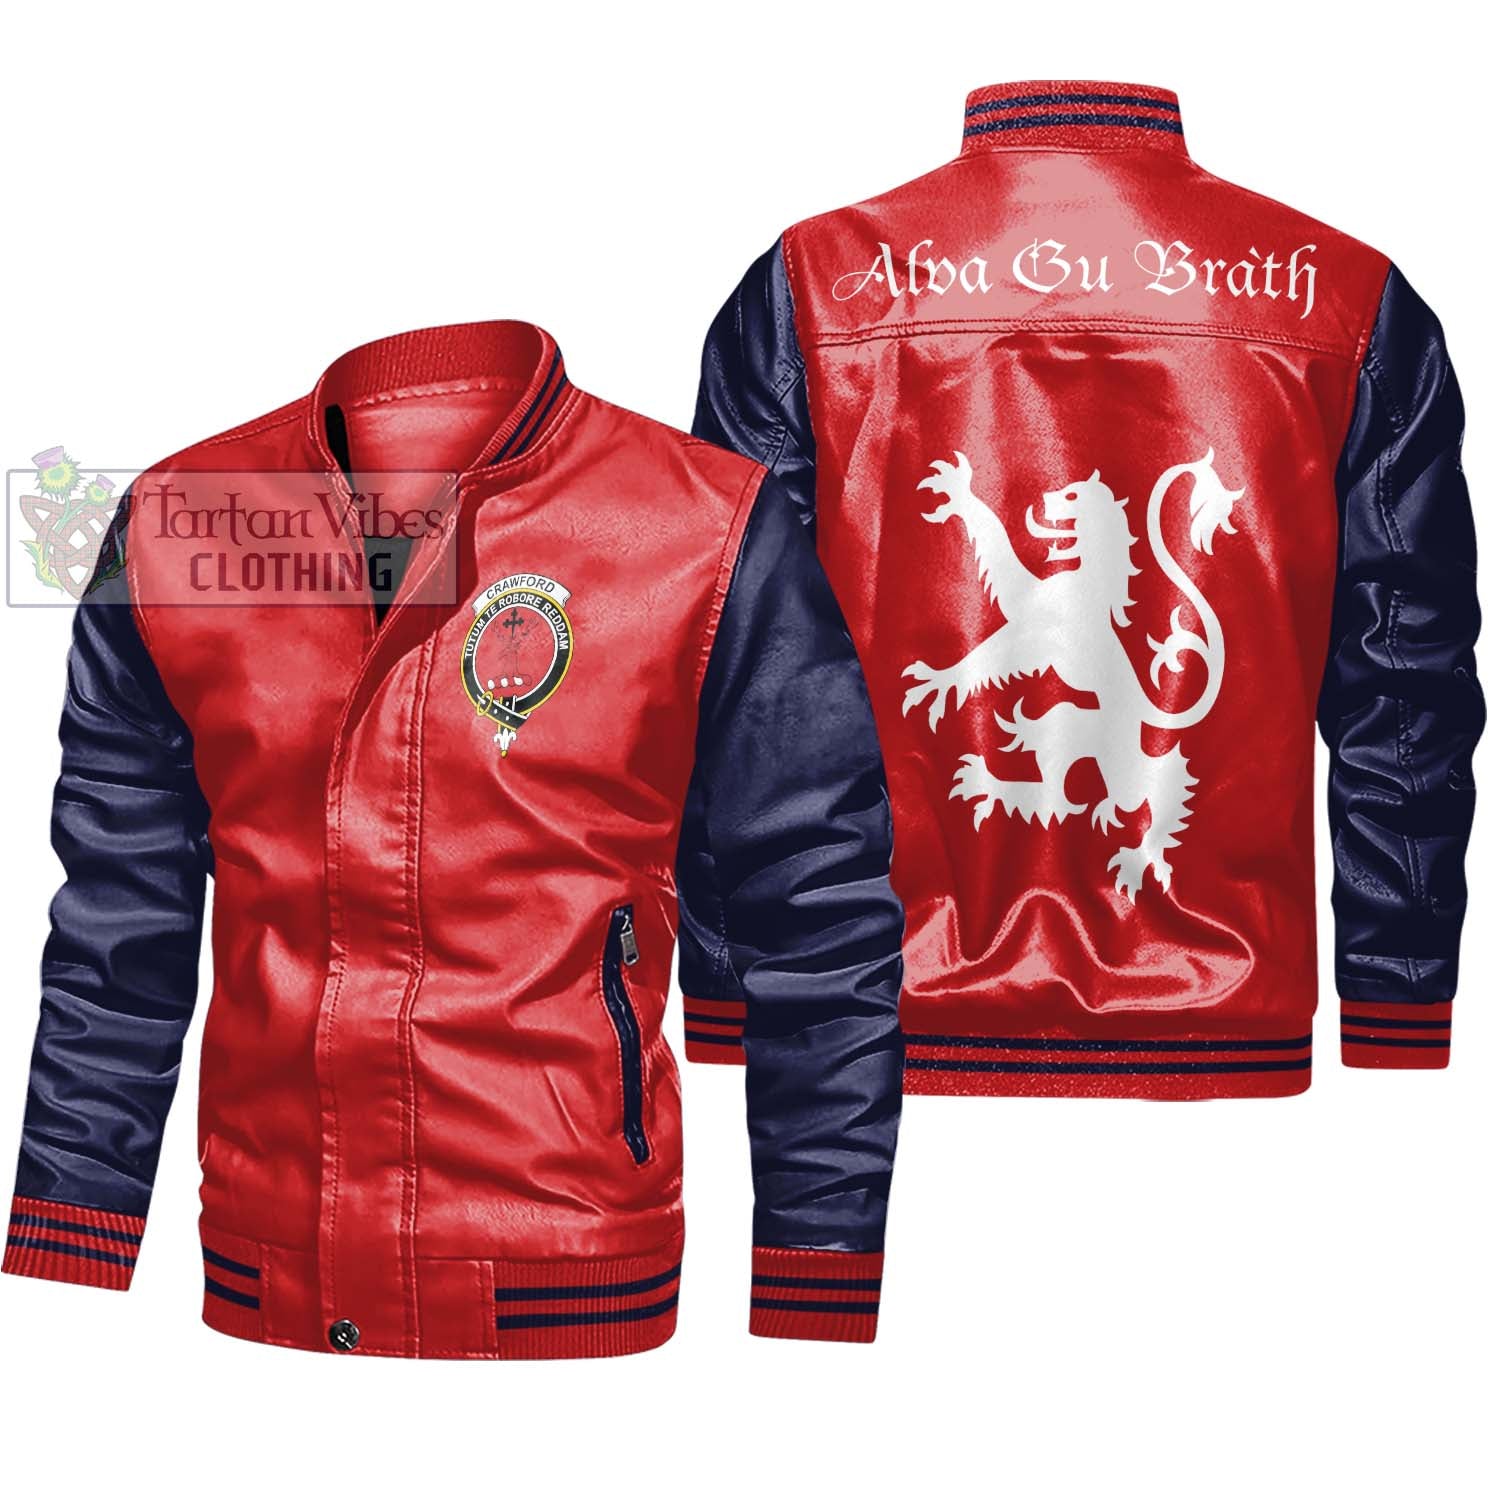 Tartan Vibes Clothing Crawford Family Crest Leather Bomber Jacket Lion Rampant Alba Gu Brath Style